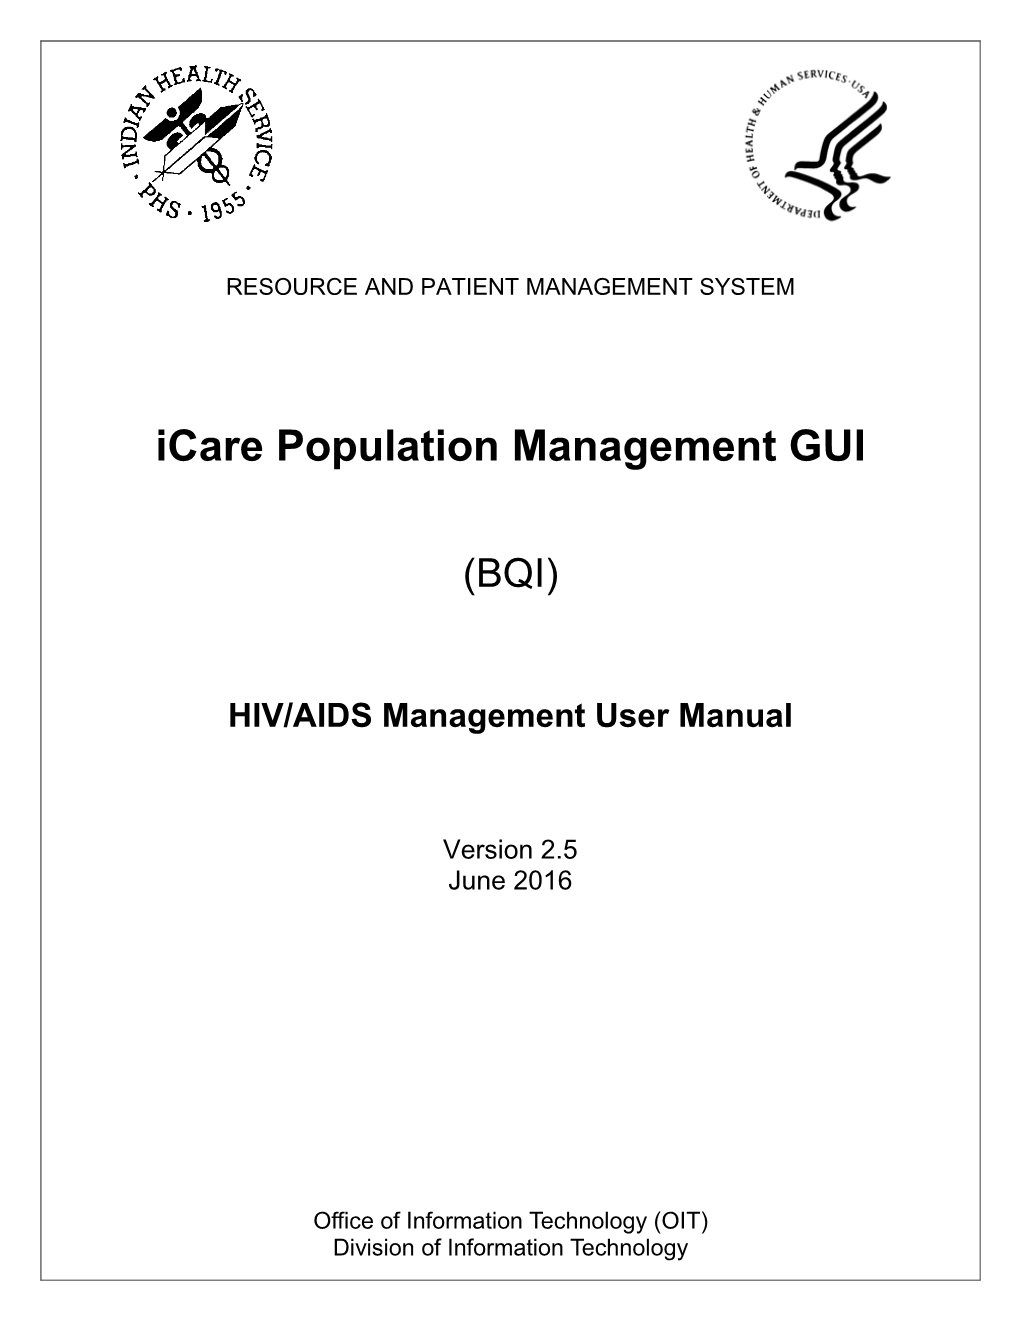 HIV/AIDS Management User Manual